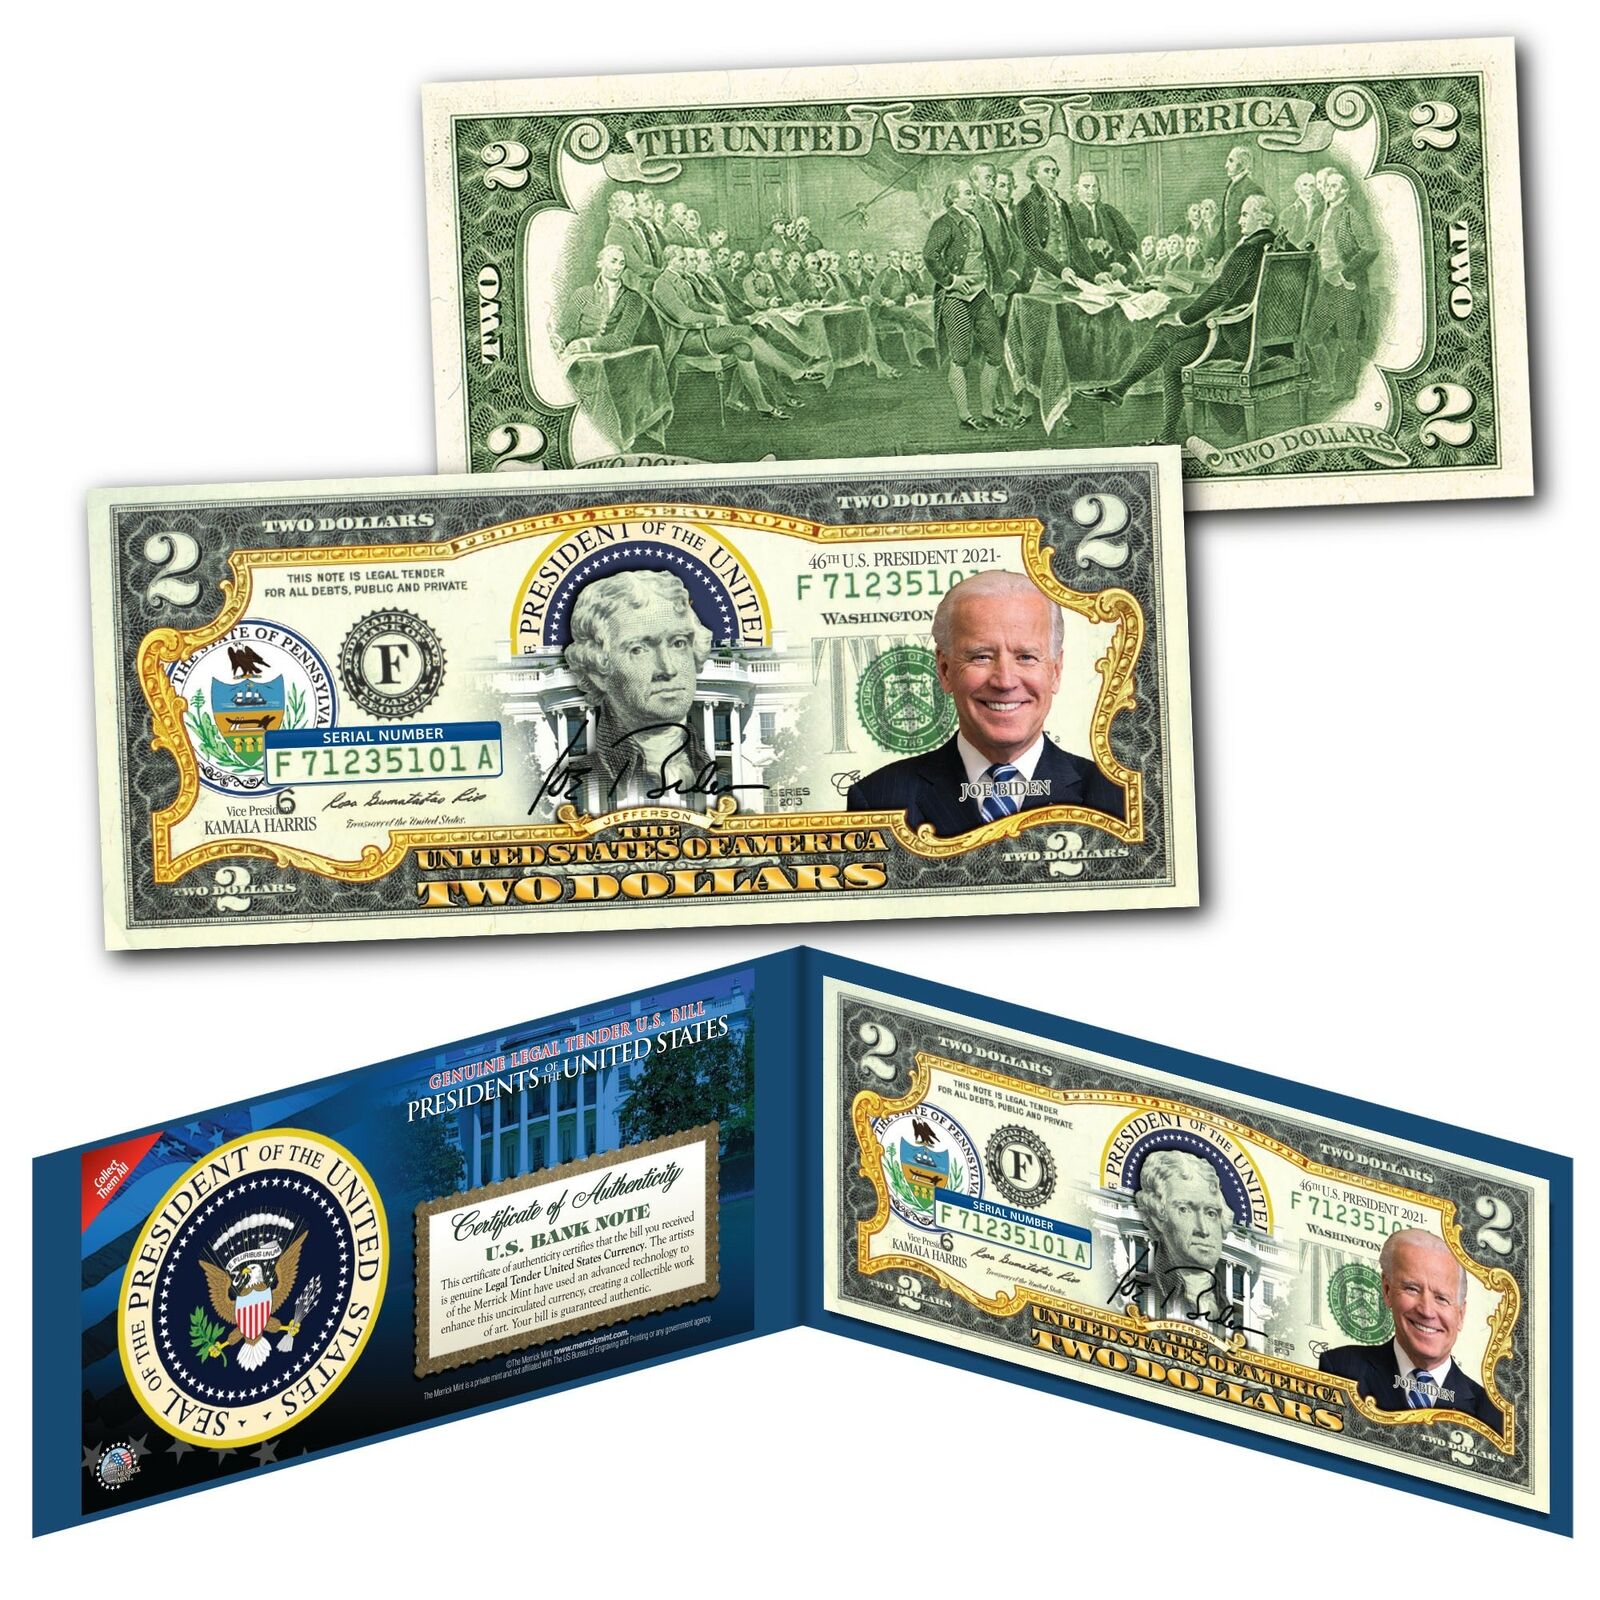 JOE BIDEN * Presidential Series #46 * Official Legal Tender $2 Bill w/ Folio